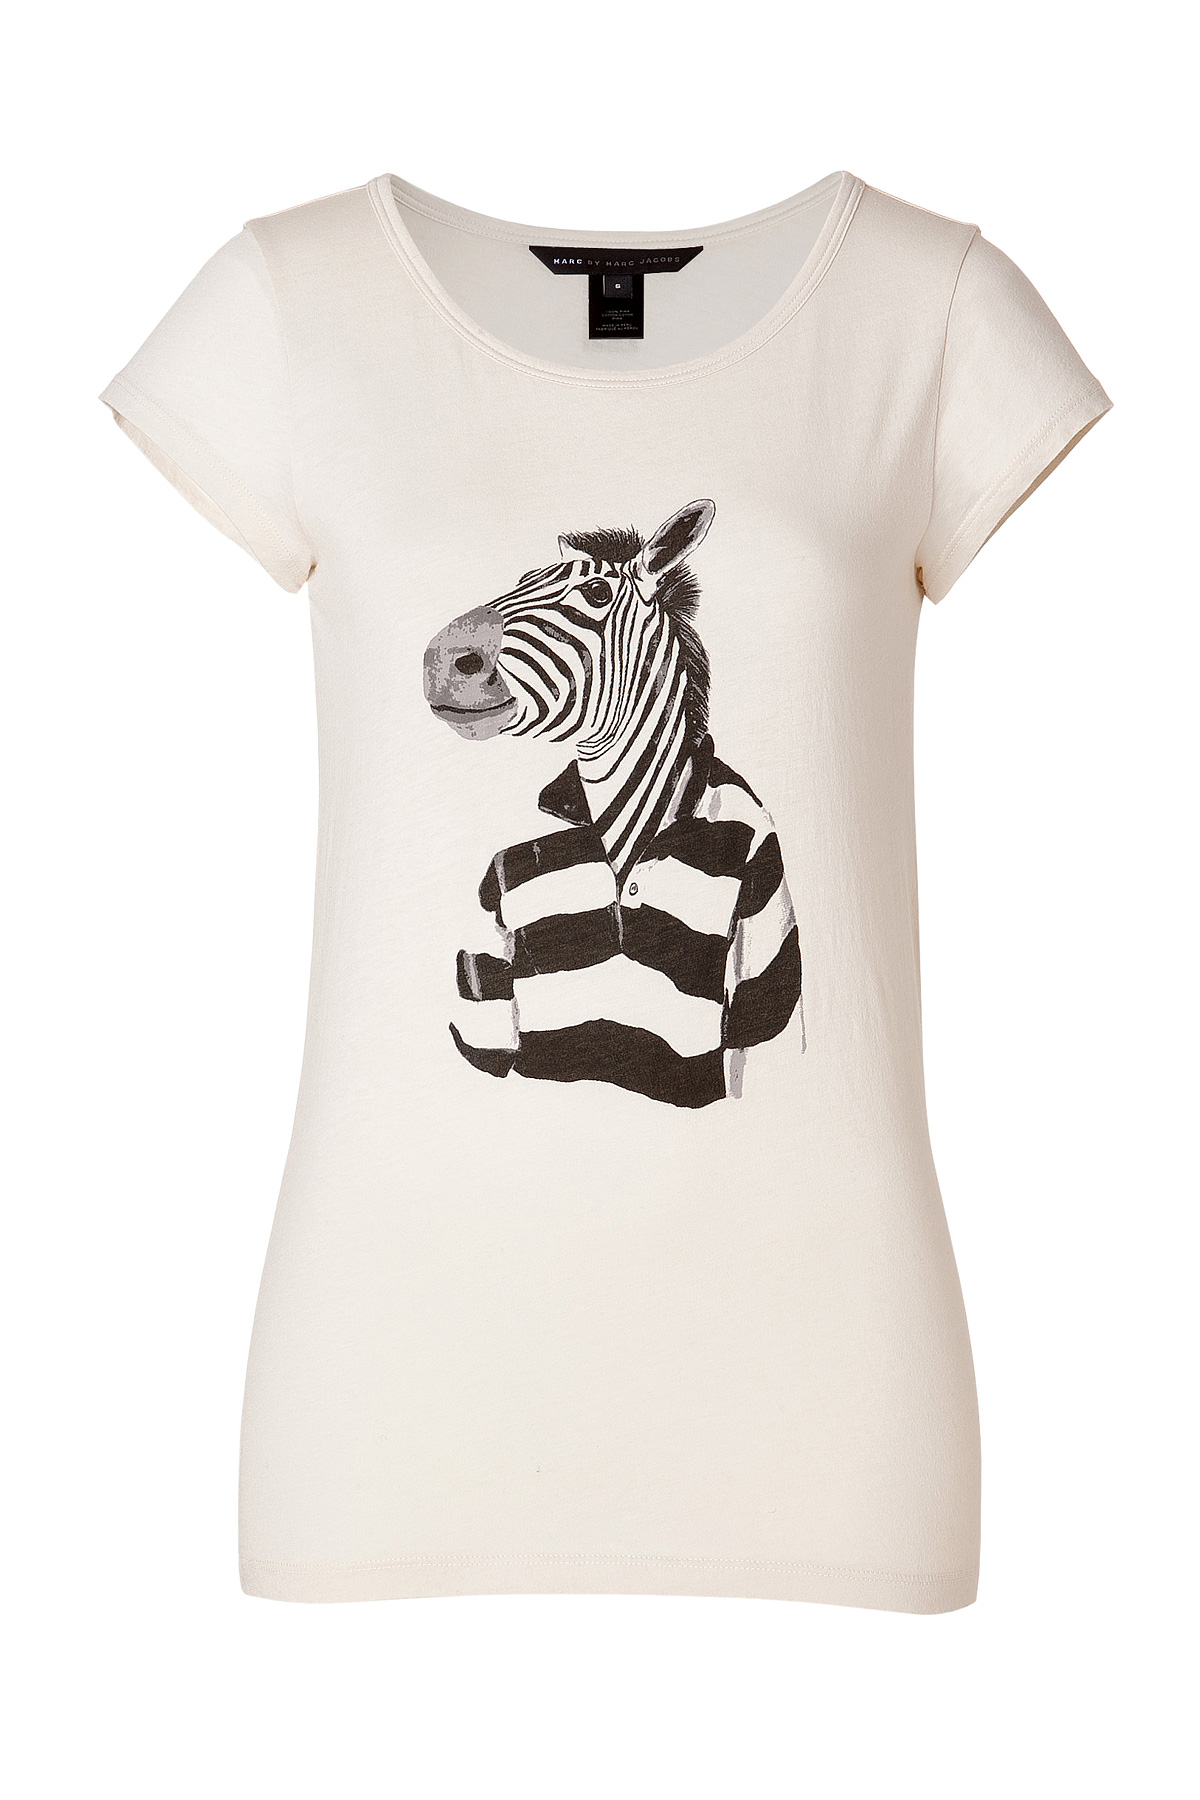 Marc By Marc Jacobs Cotton Mr Zebra T-Shirt in White (zebra) | Lyst